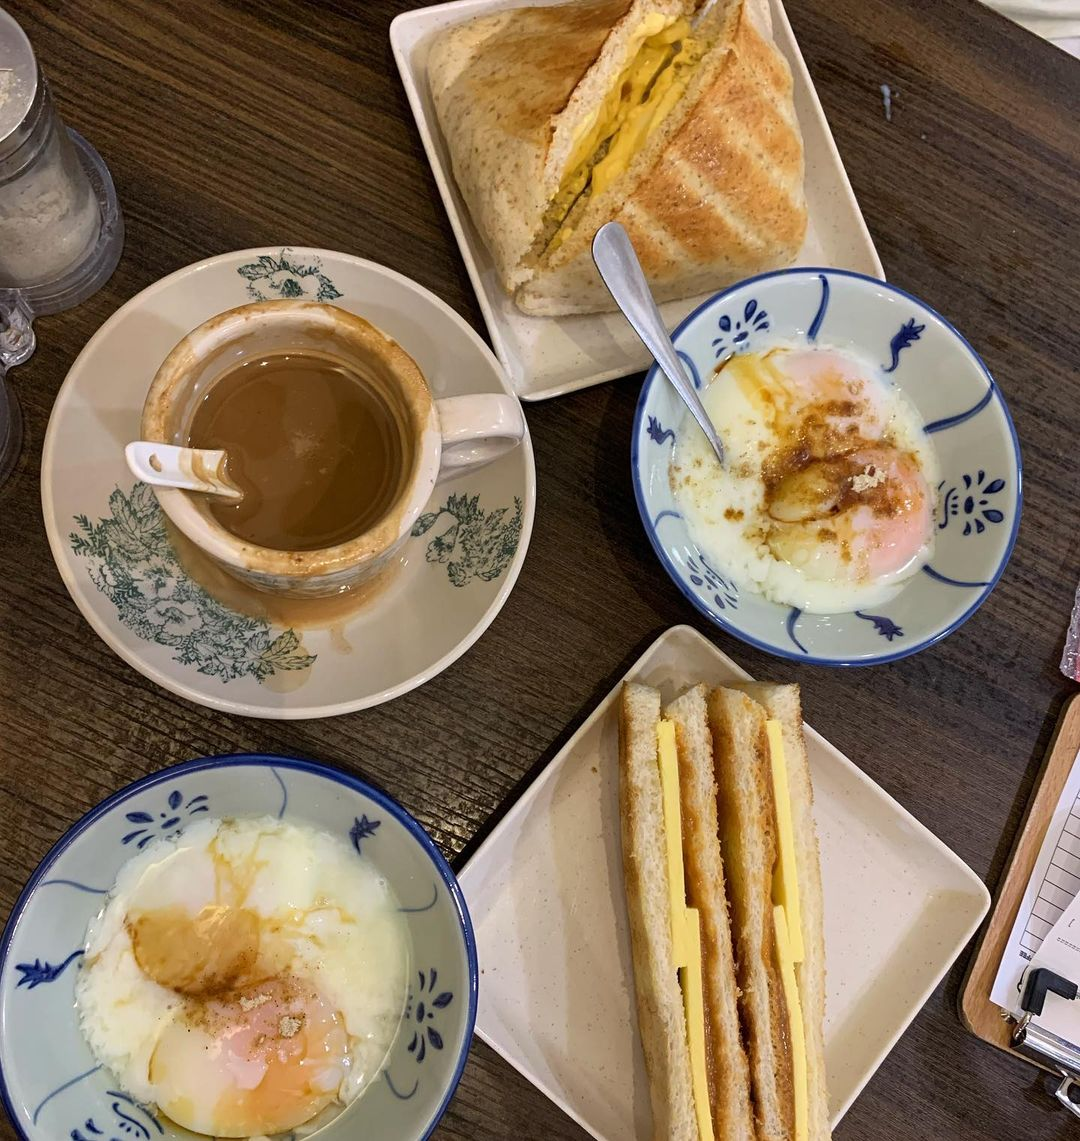 jb cafe guide - Roast & Coffee kaya toast